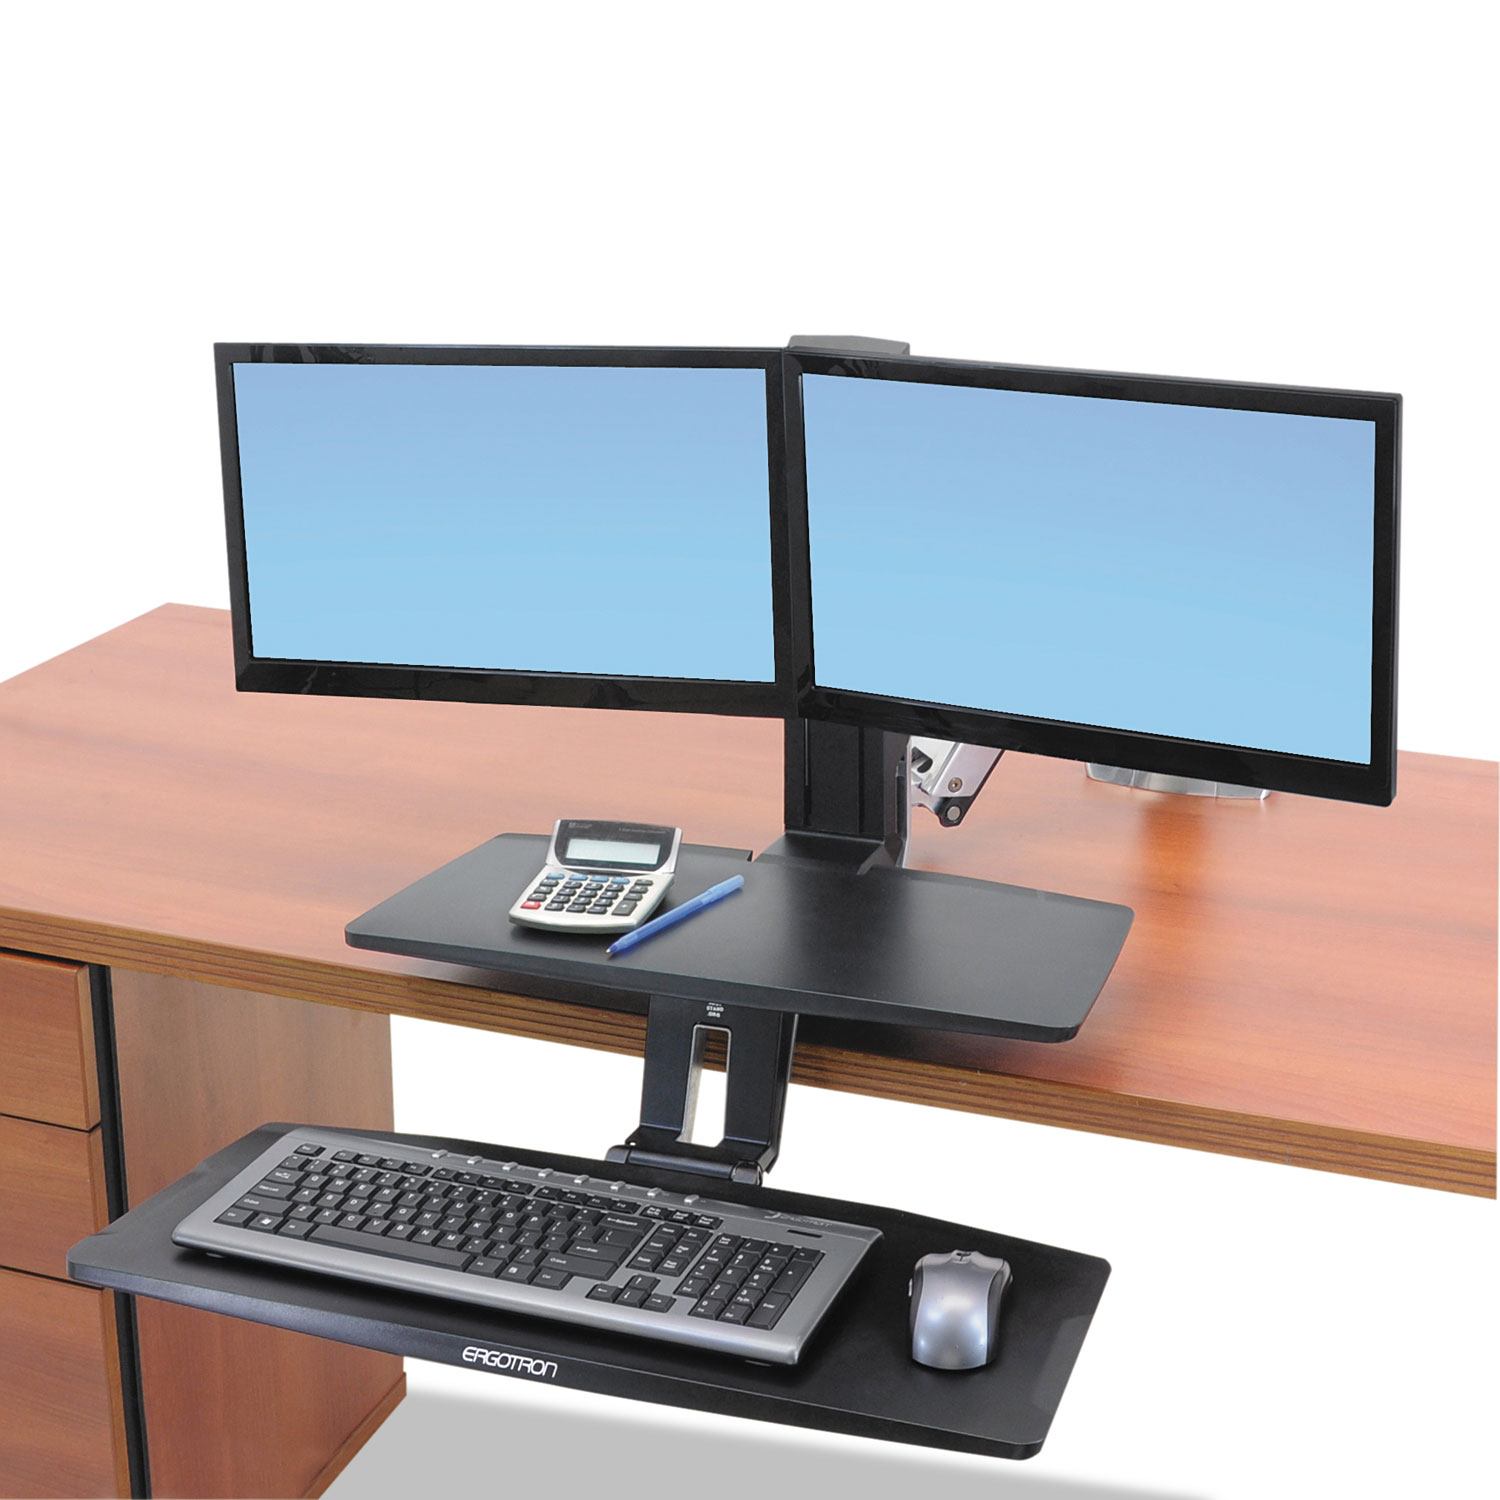 Ergotron WorkFit-A Dual Workstation With Suspended Keyboard - Standing desk converter - black, polished aluminum - image 2 of 5